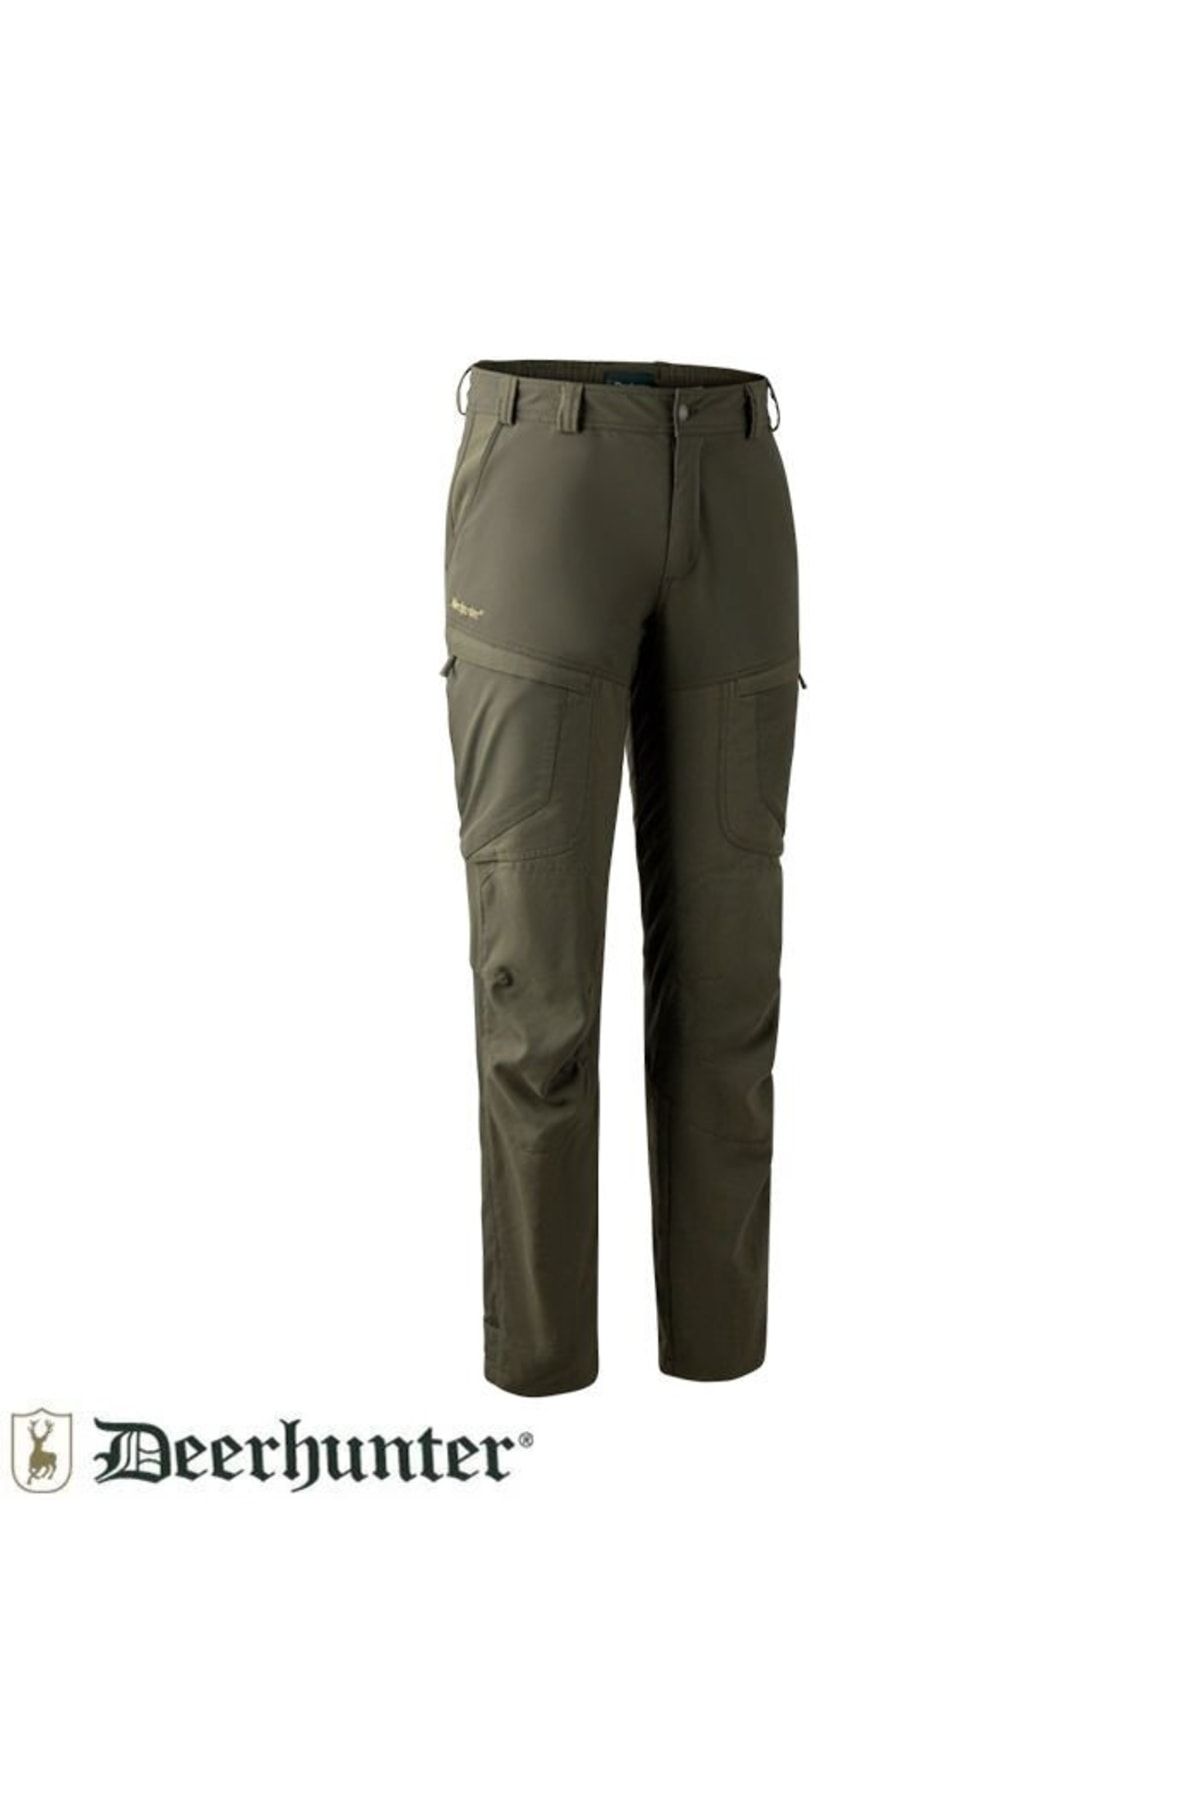 Deerhunter 389 Strike Extreme Yeşil Pantolon 54